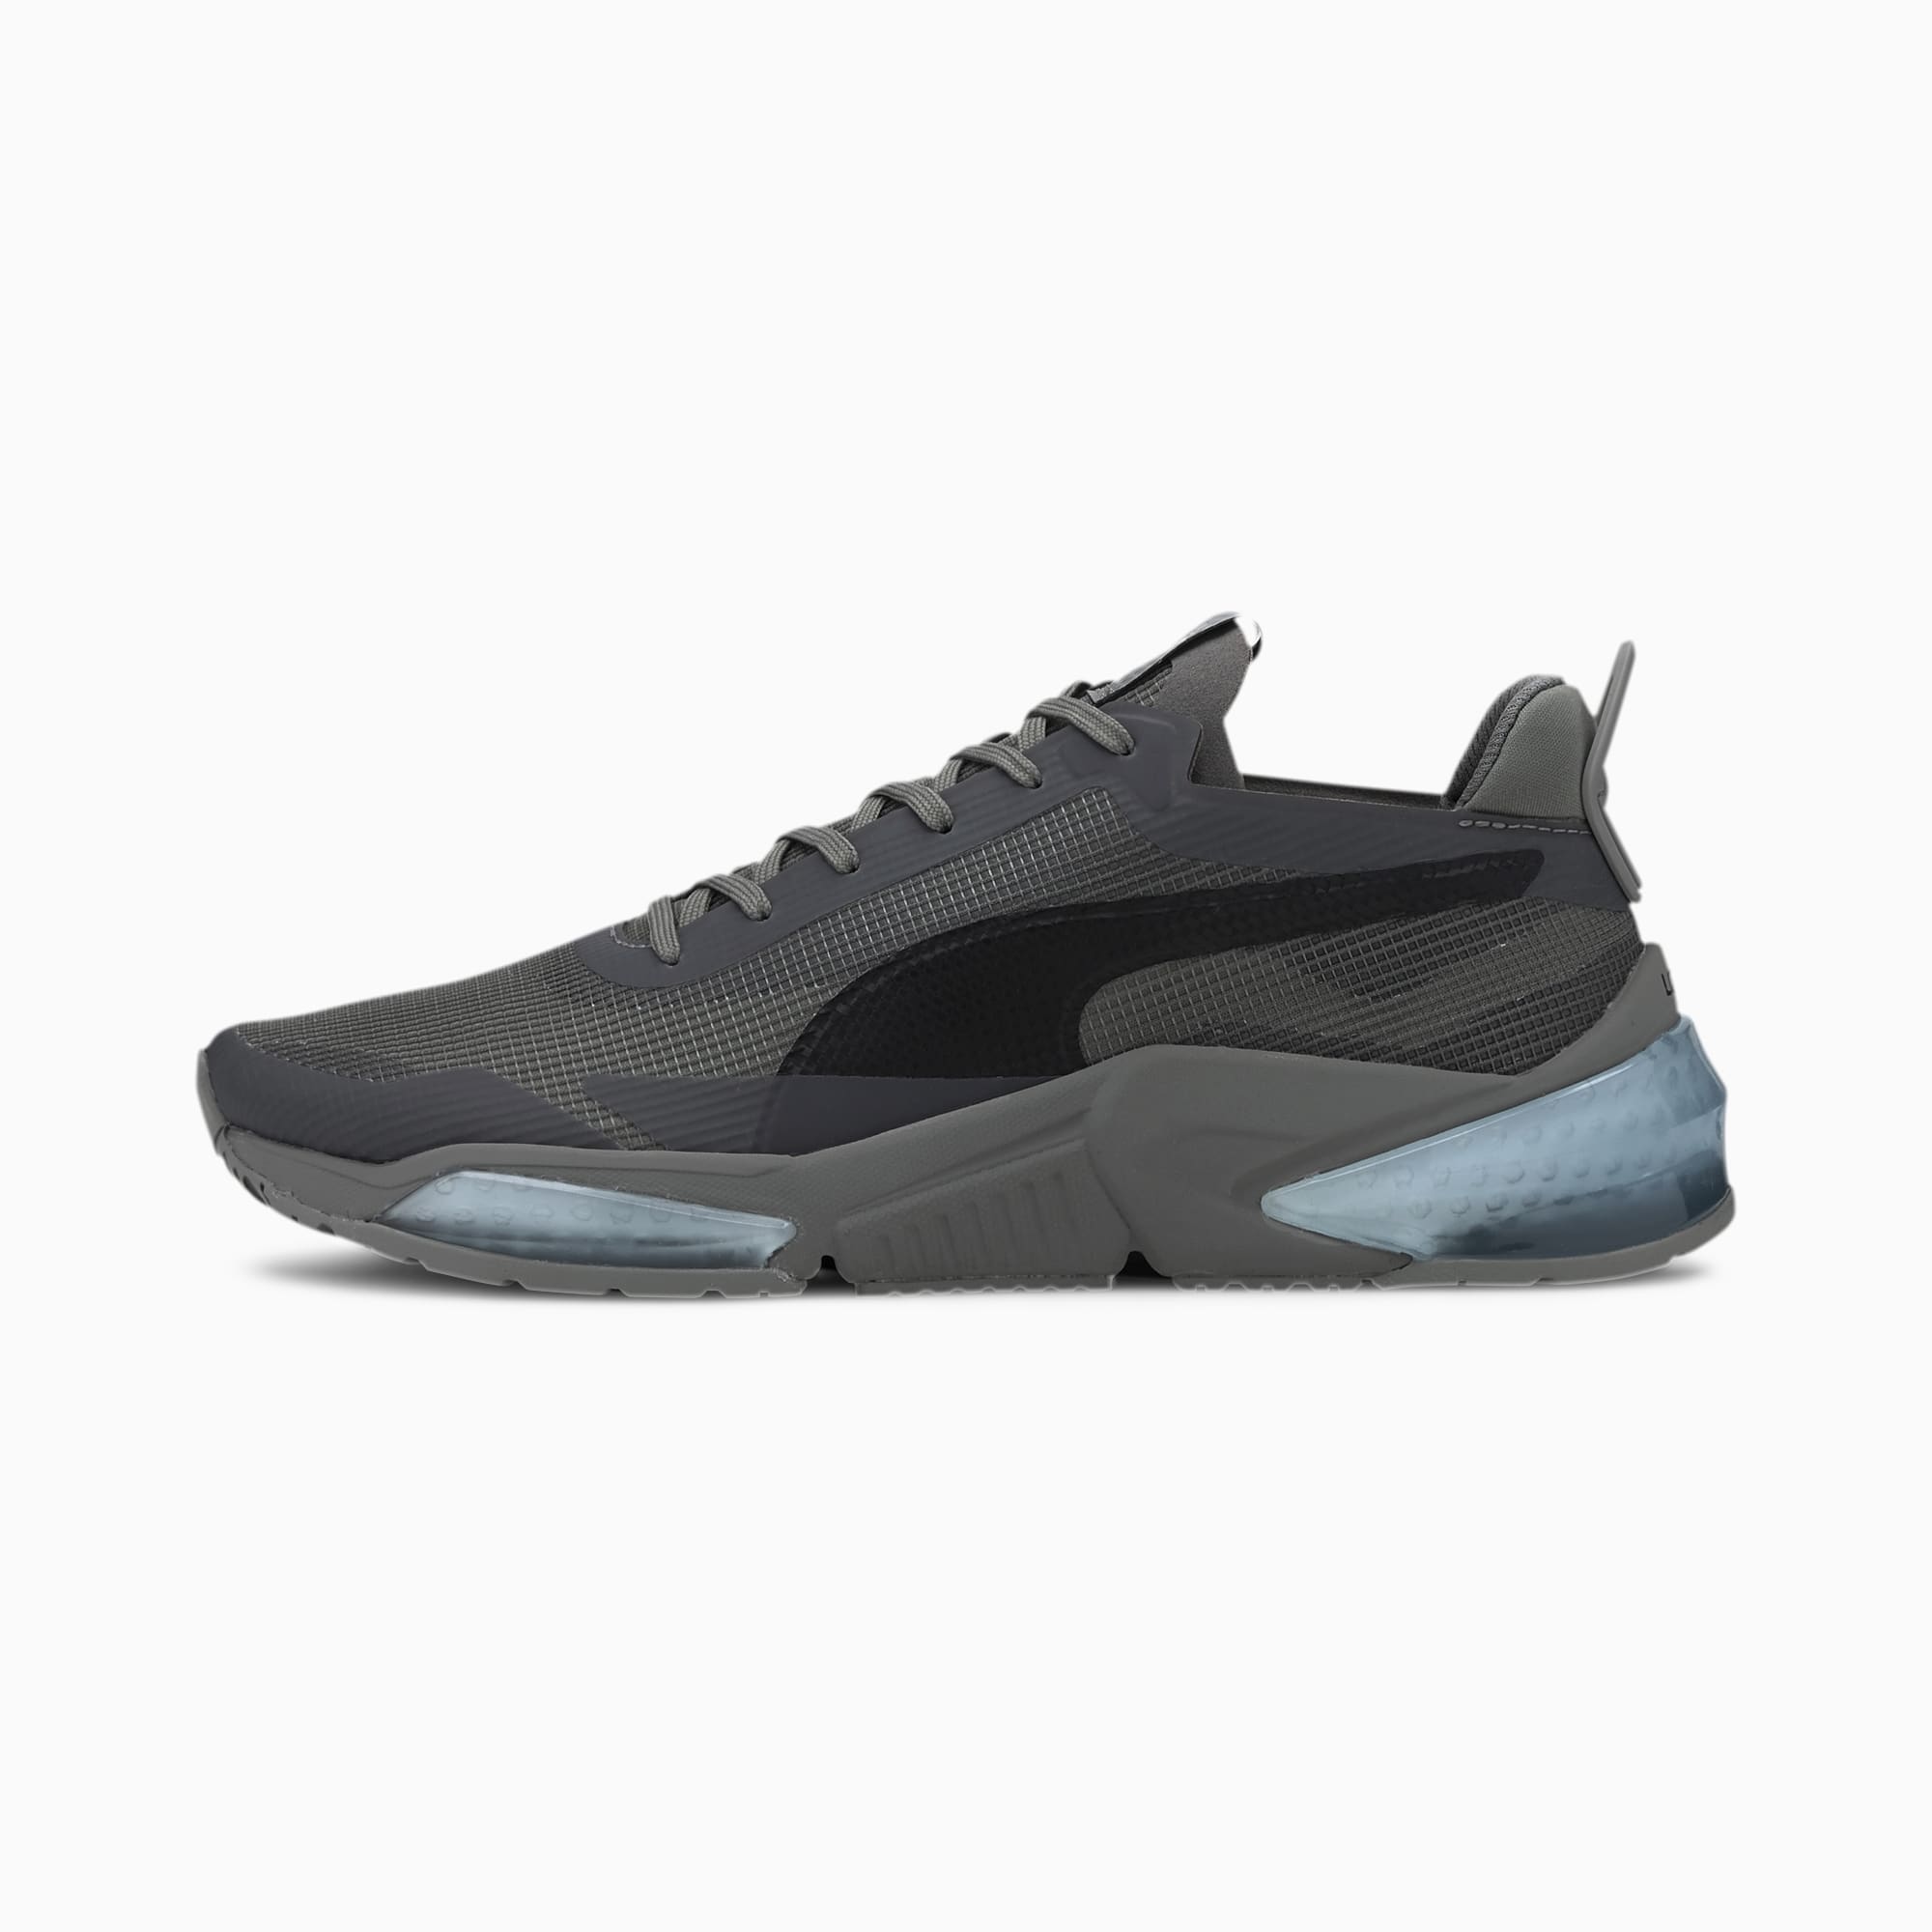 gray puma sneakers